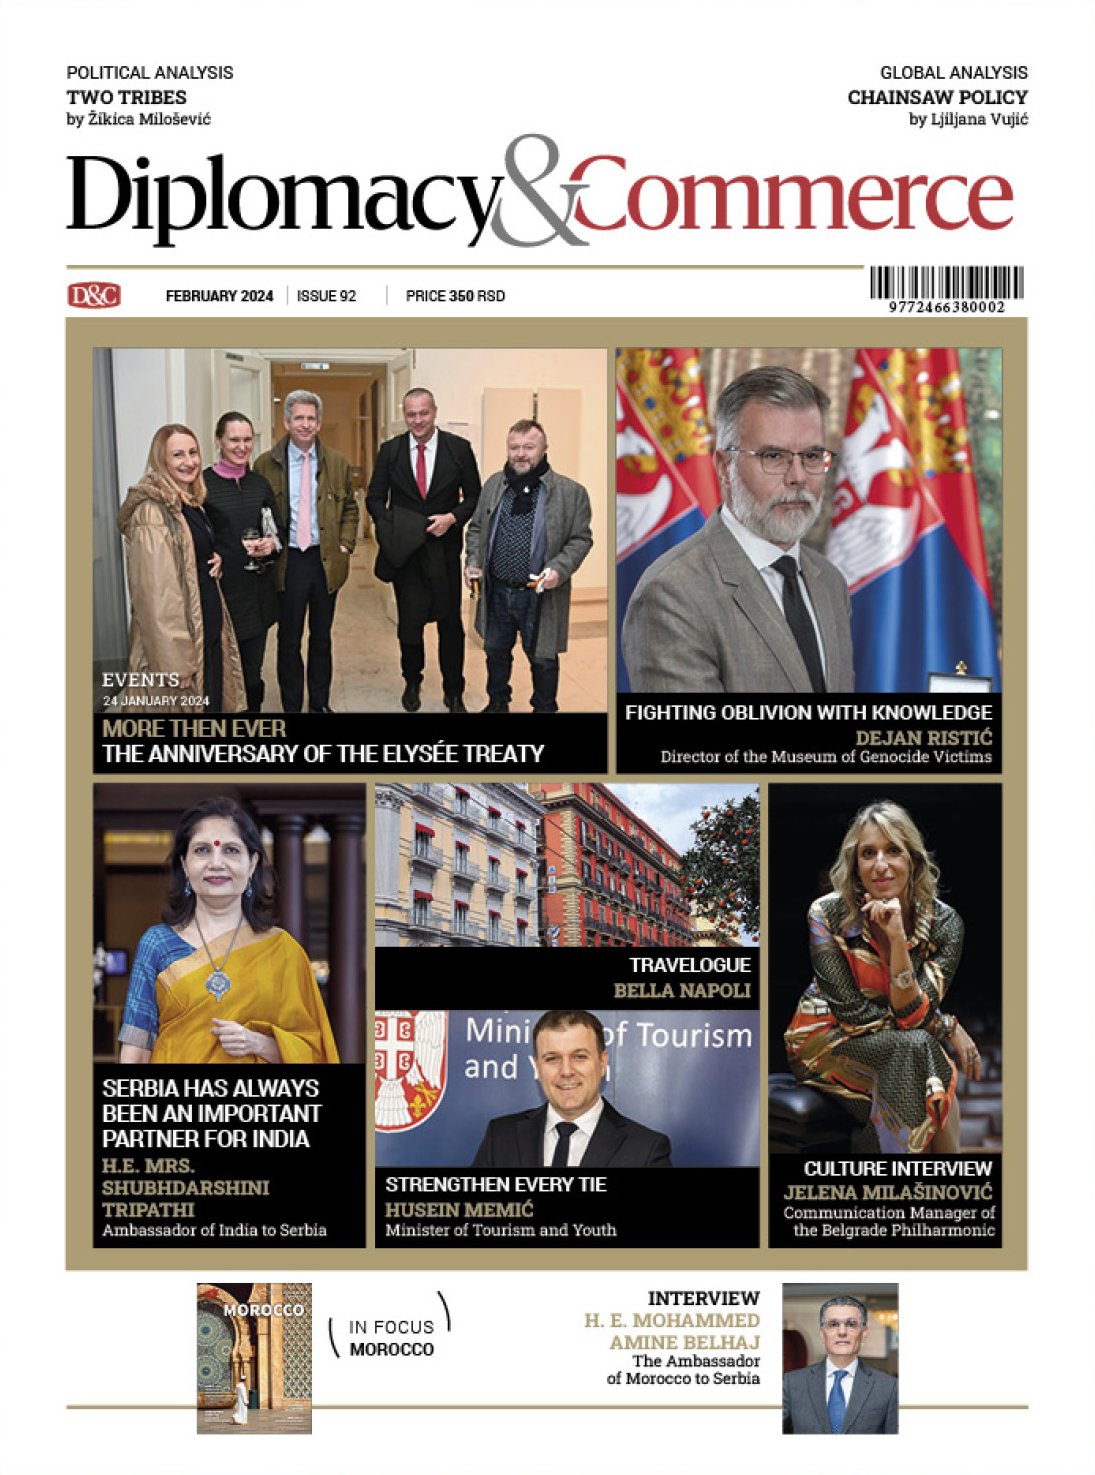 DandC - Diplomacy&Commerce - 92 - February 2024 - Cover